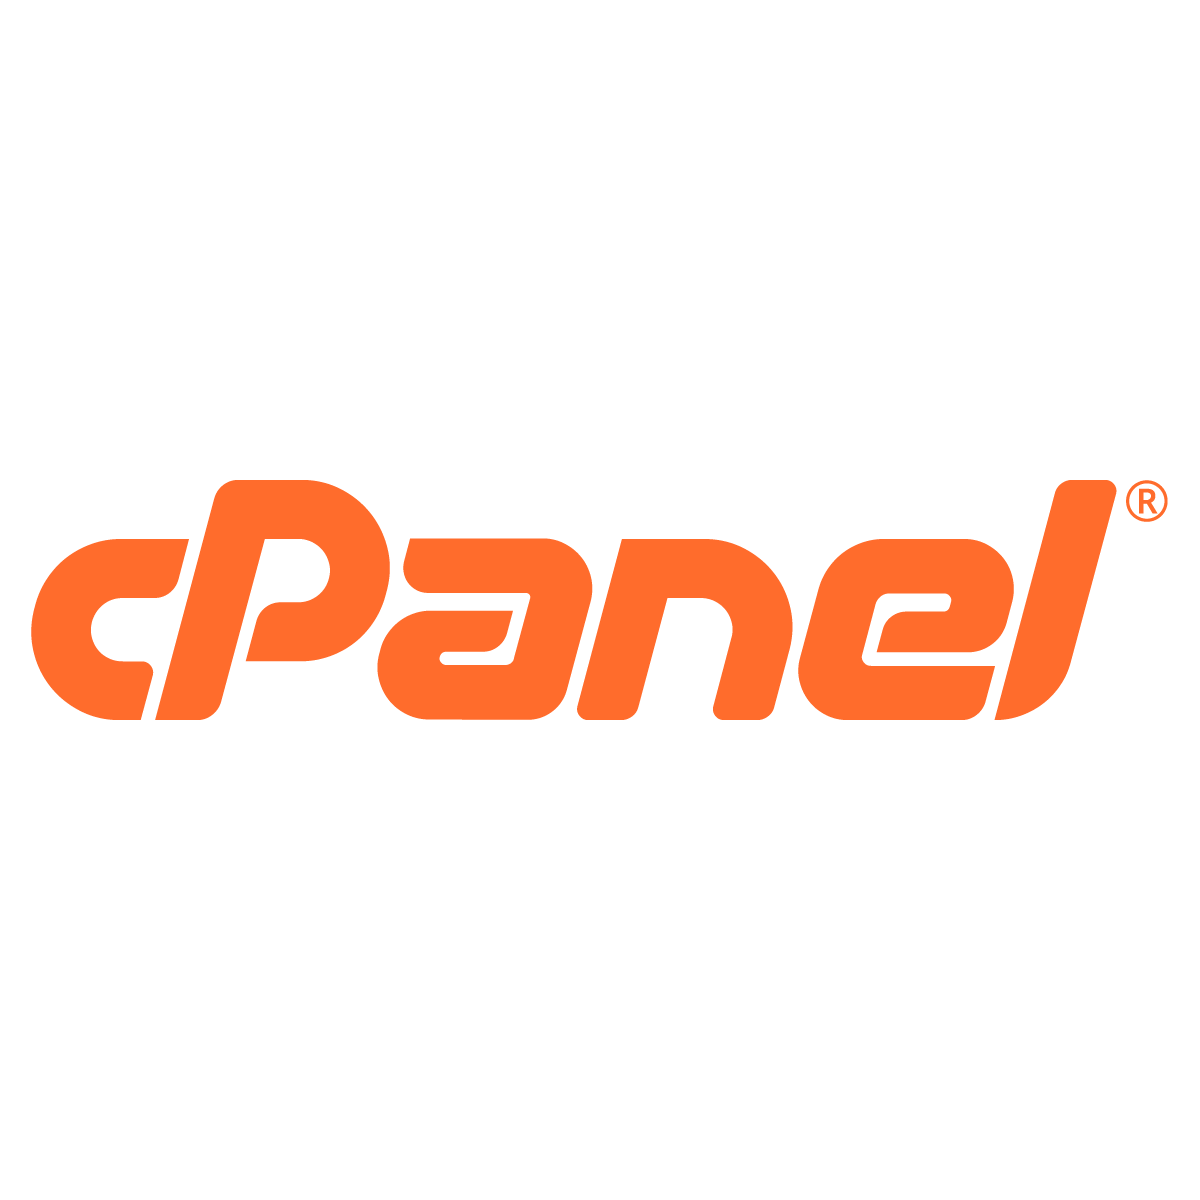 cPanel Logo Transparent Image